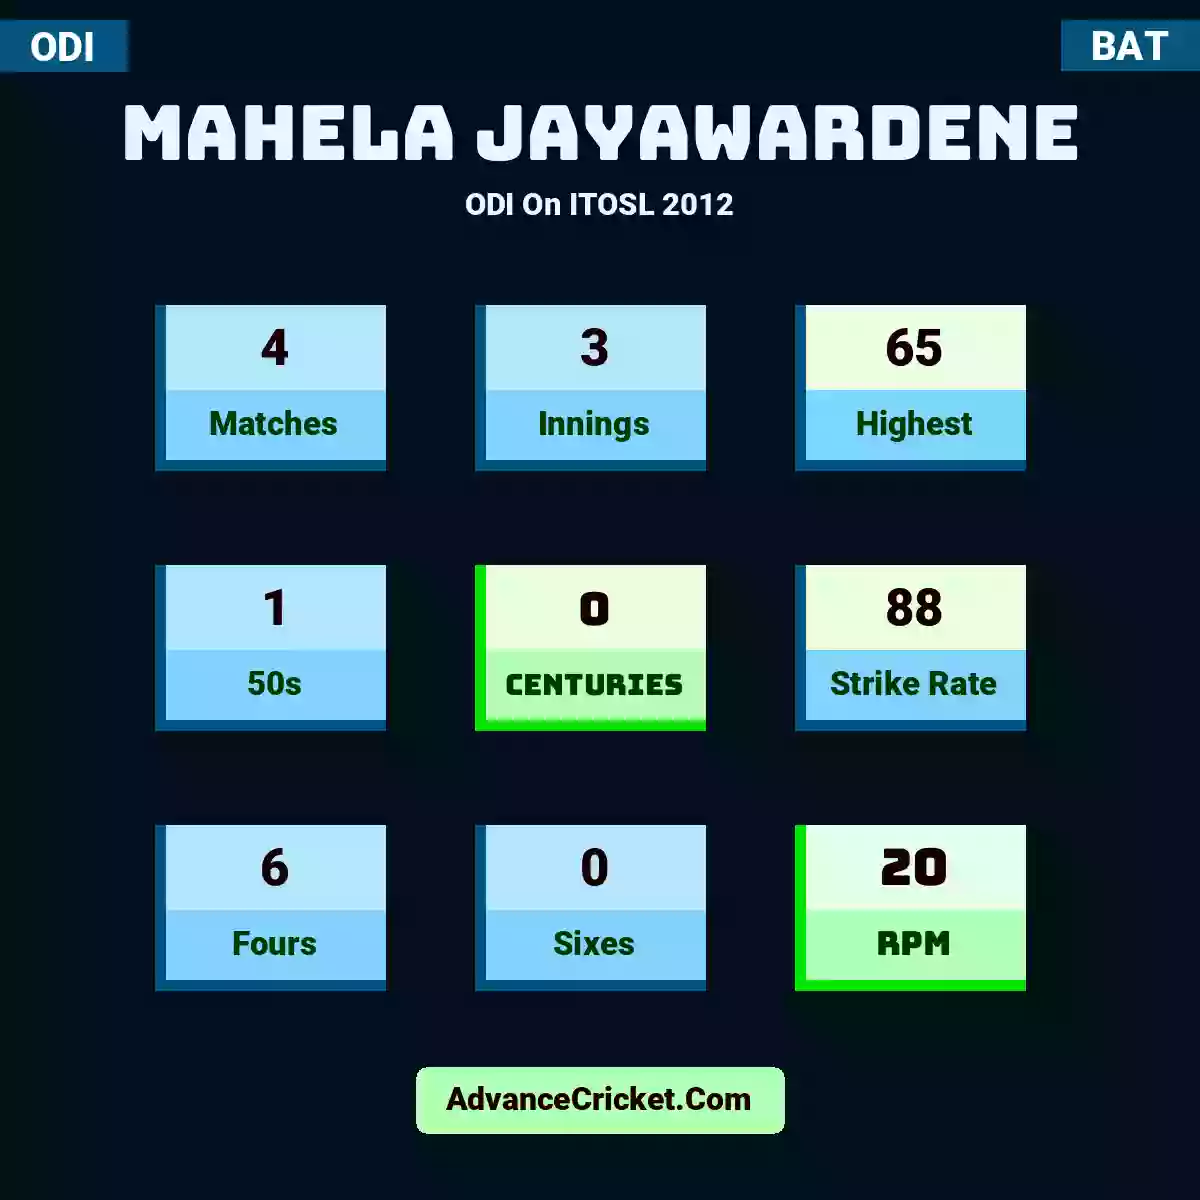 Mahela Jayawardene ODI  On ITOSL 2012, Mahela Jayawardene played 4 matches, scored 65 runs as highest, 1 half-centuries, and 0 centuries, with a strike rate of 88. M.Jayawardene hit 6 fours and 0 sixes, with an RPM of 20.